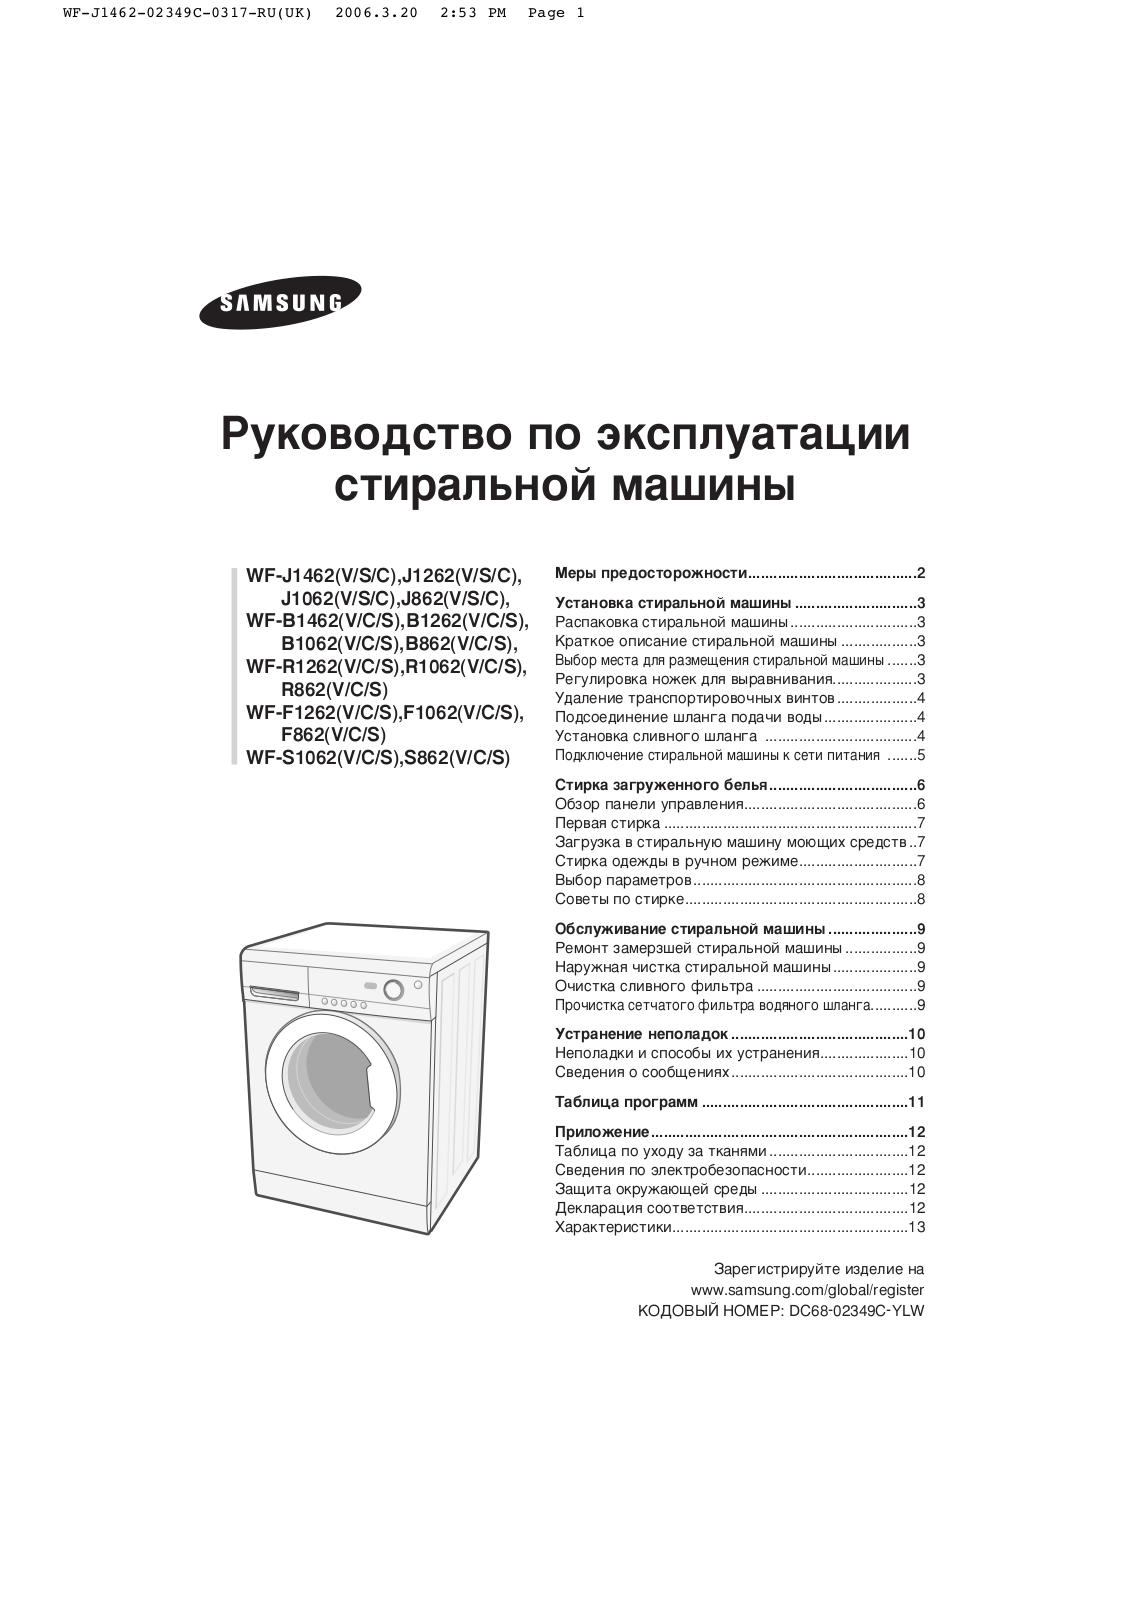 Samsung WF-S862 User Manual